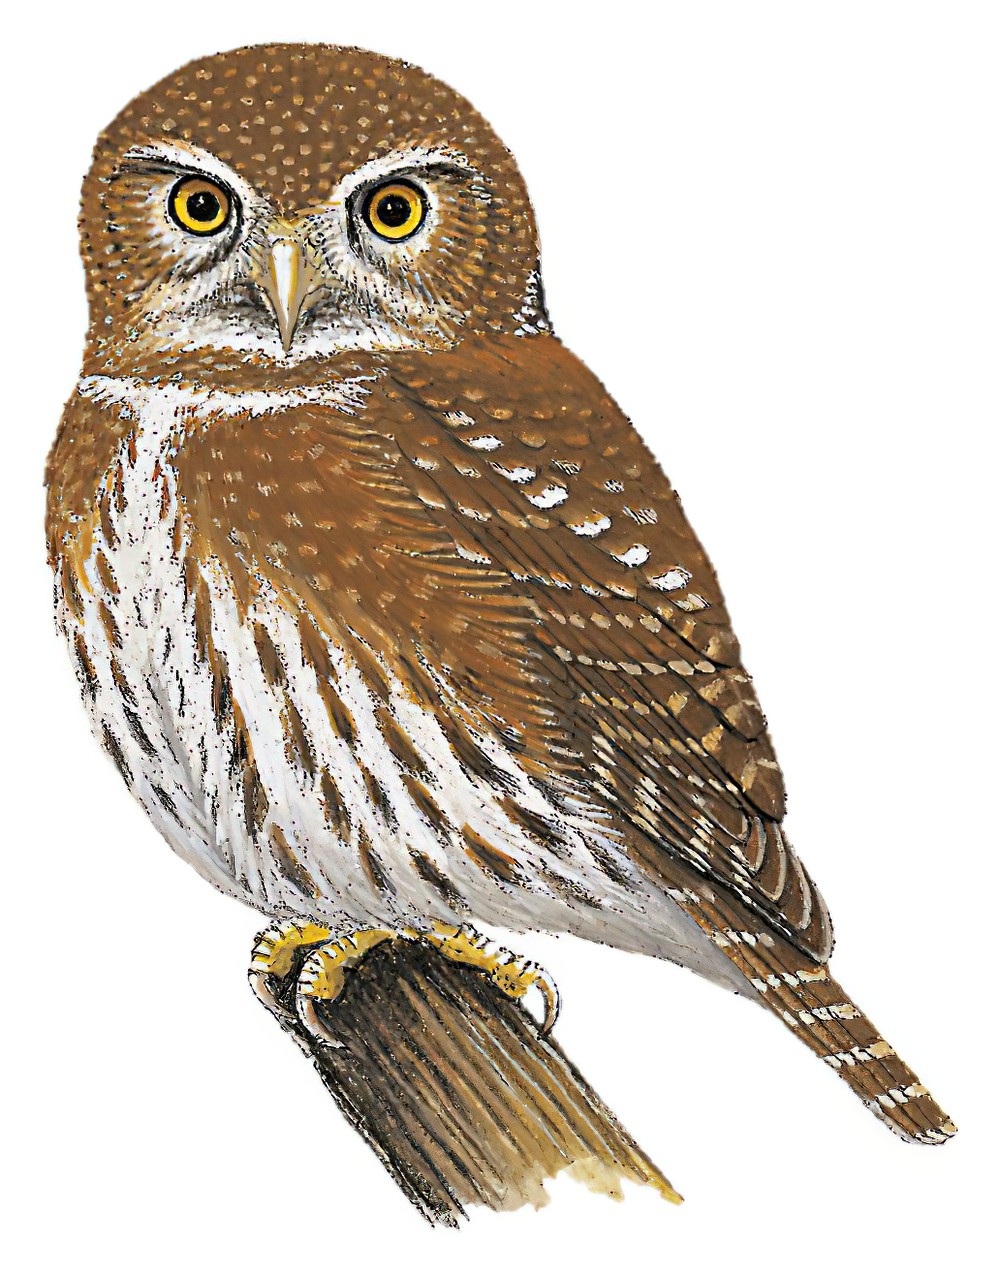 Northern Pygmy-Owl / Glaucidium gnoma